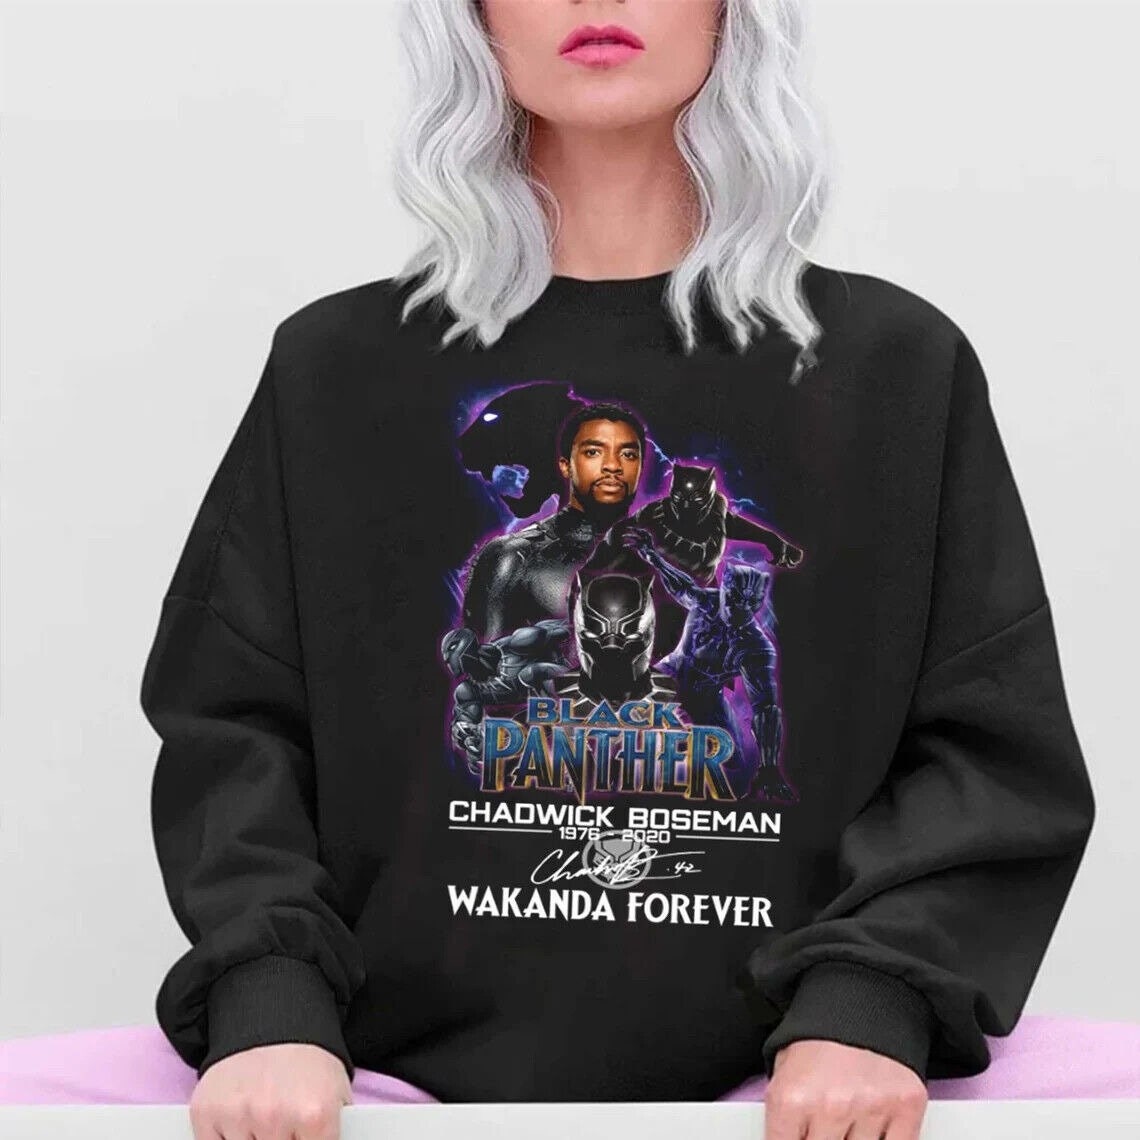 Discover Black Panther 2 Sweatshirt, Wakanda Forever 2022 Movie Character